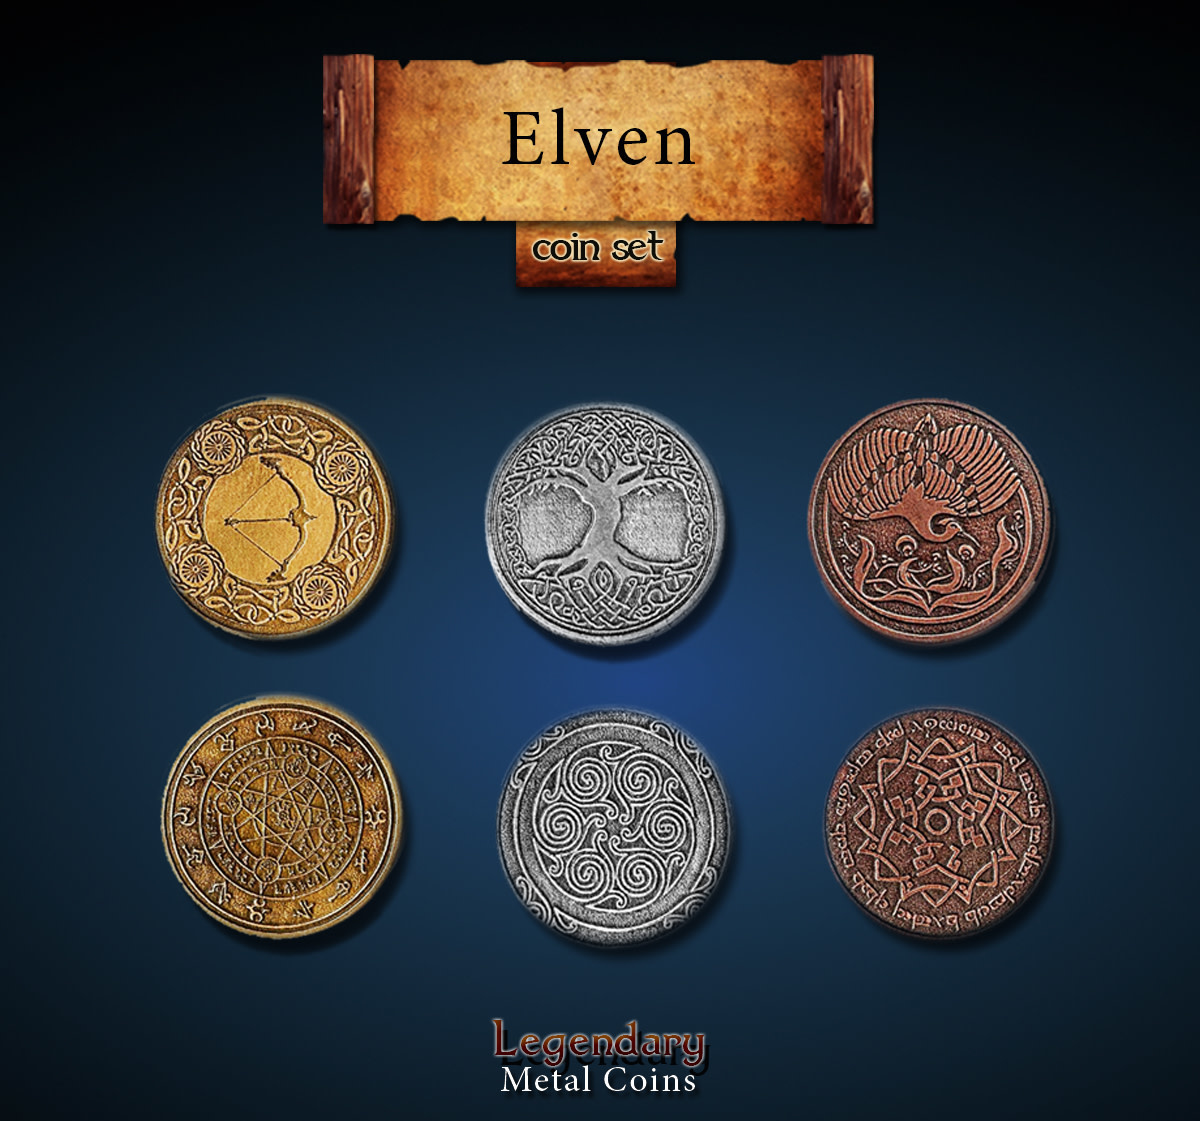 Legendary Metal Coins: Elven (24pcs)